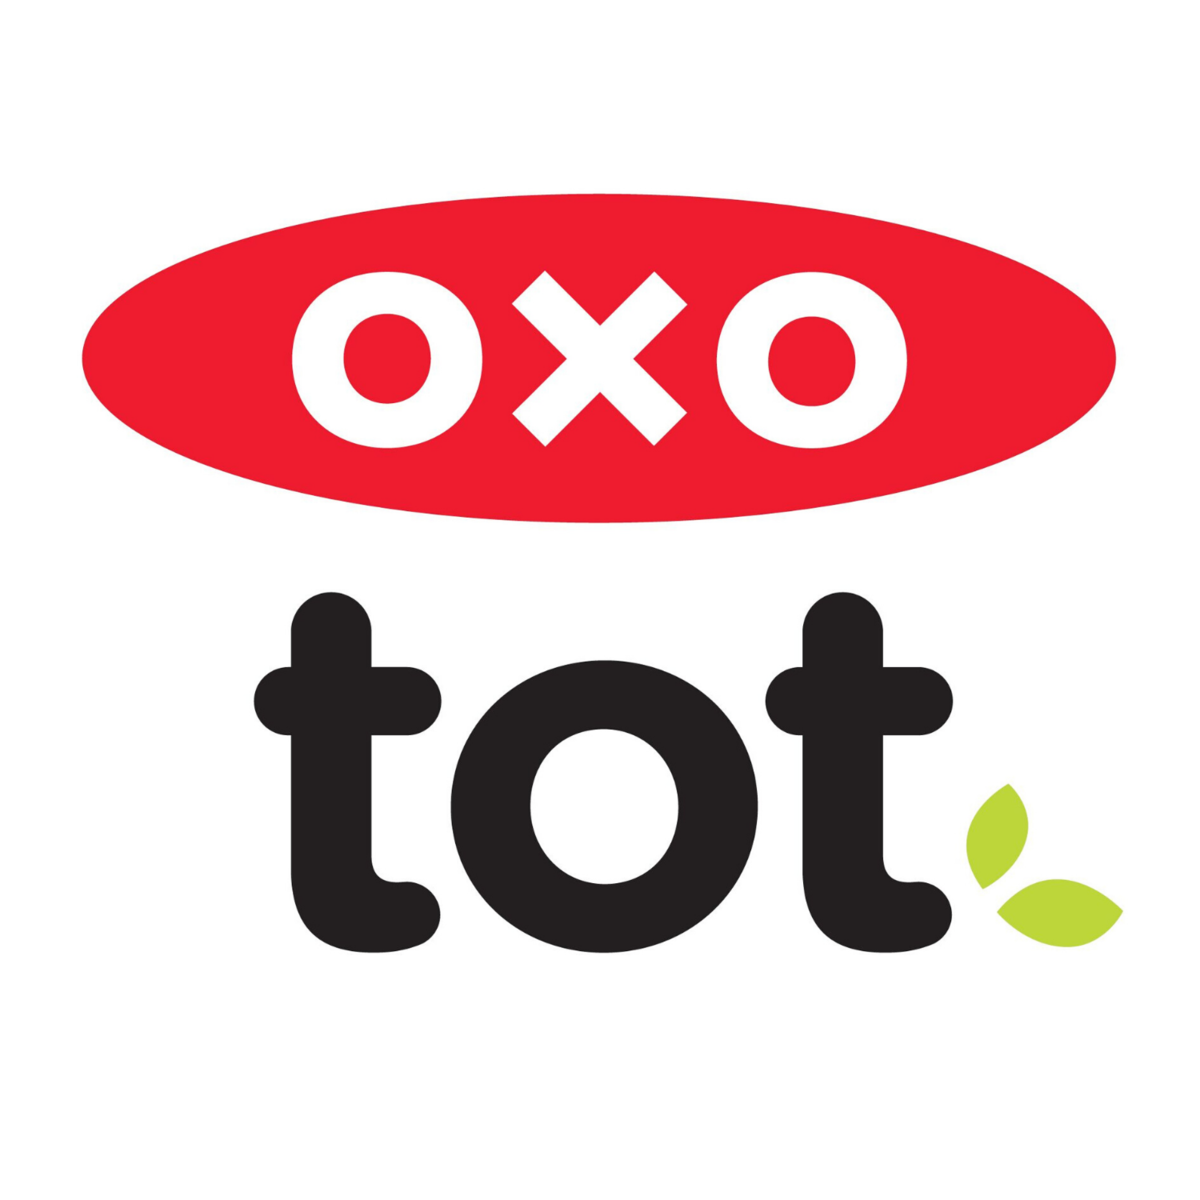 OxoTotLogo